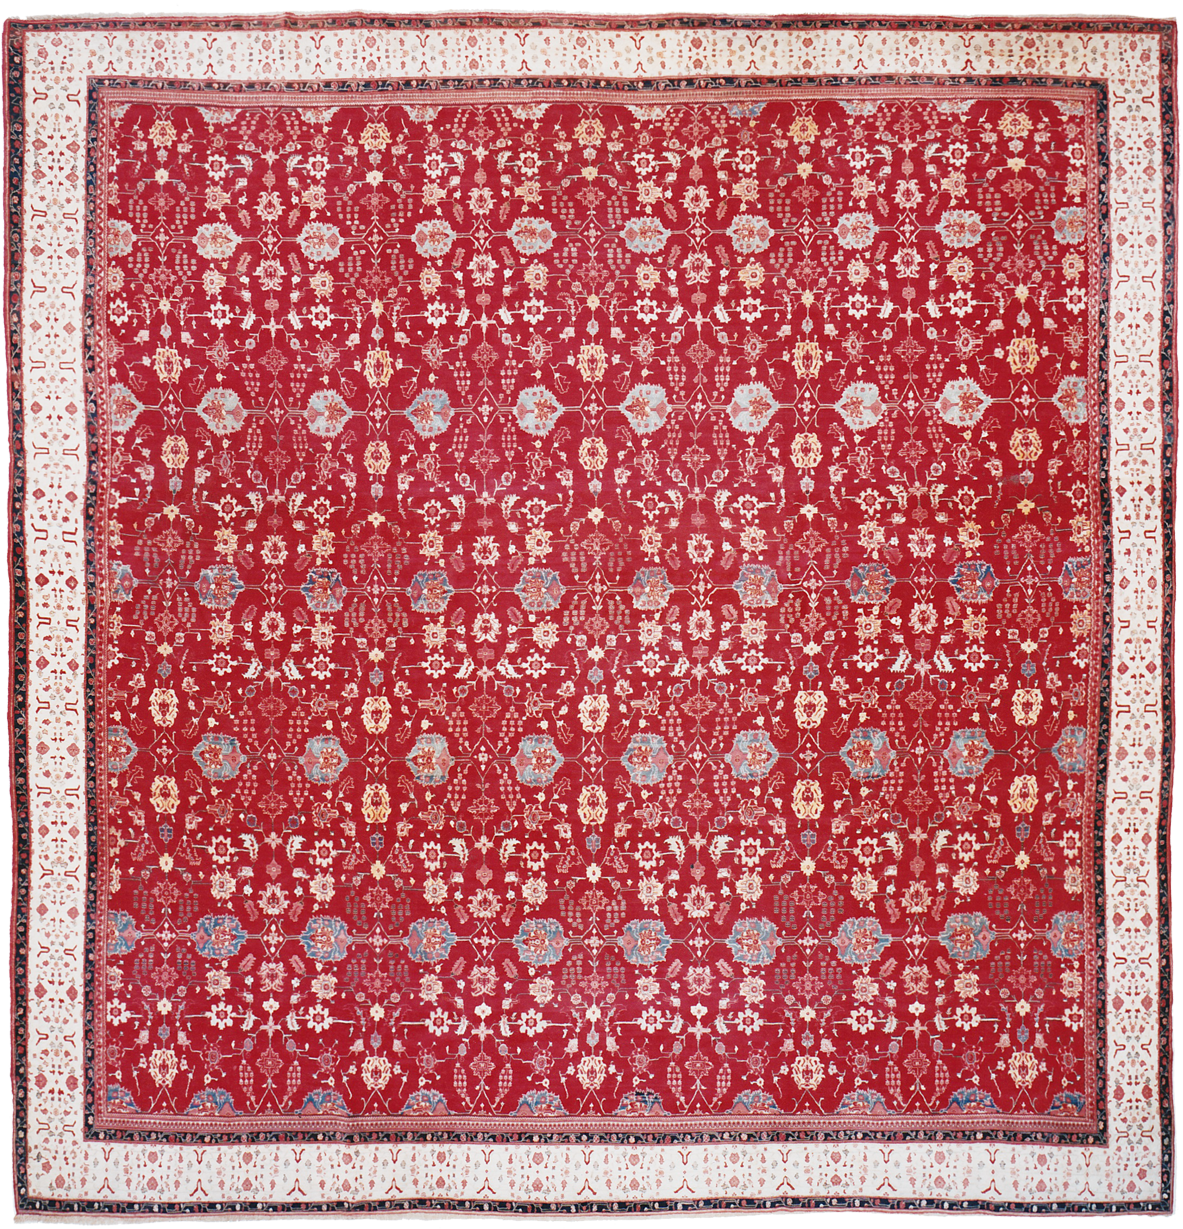 Fine and rare Agra carpet